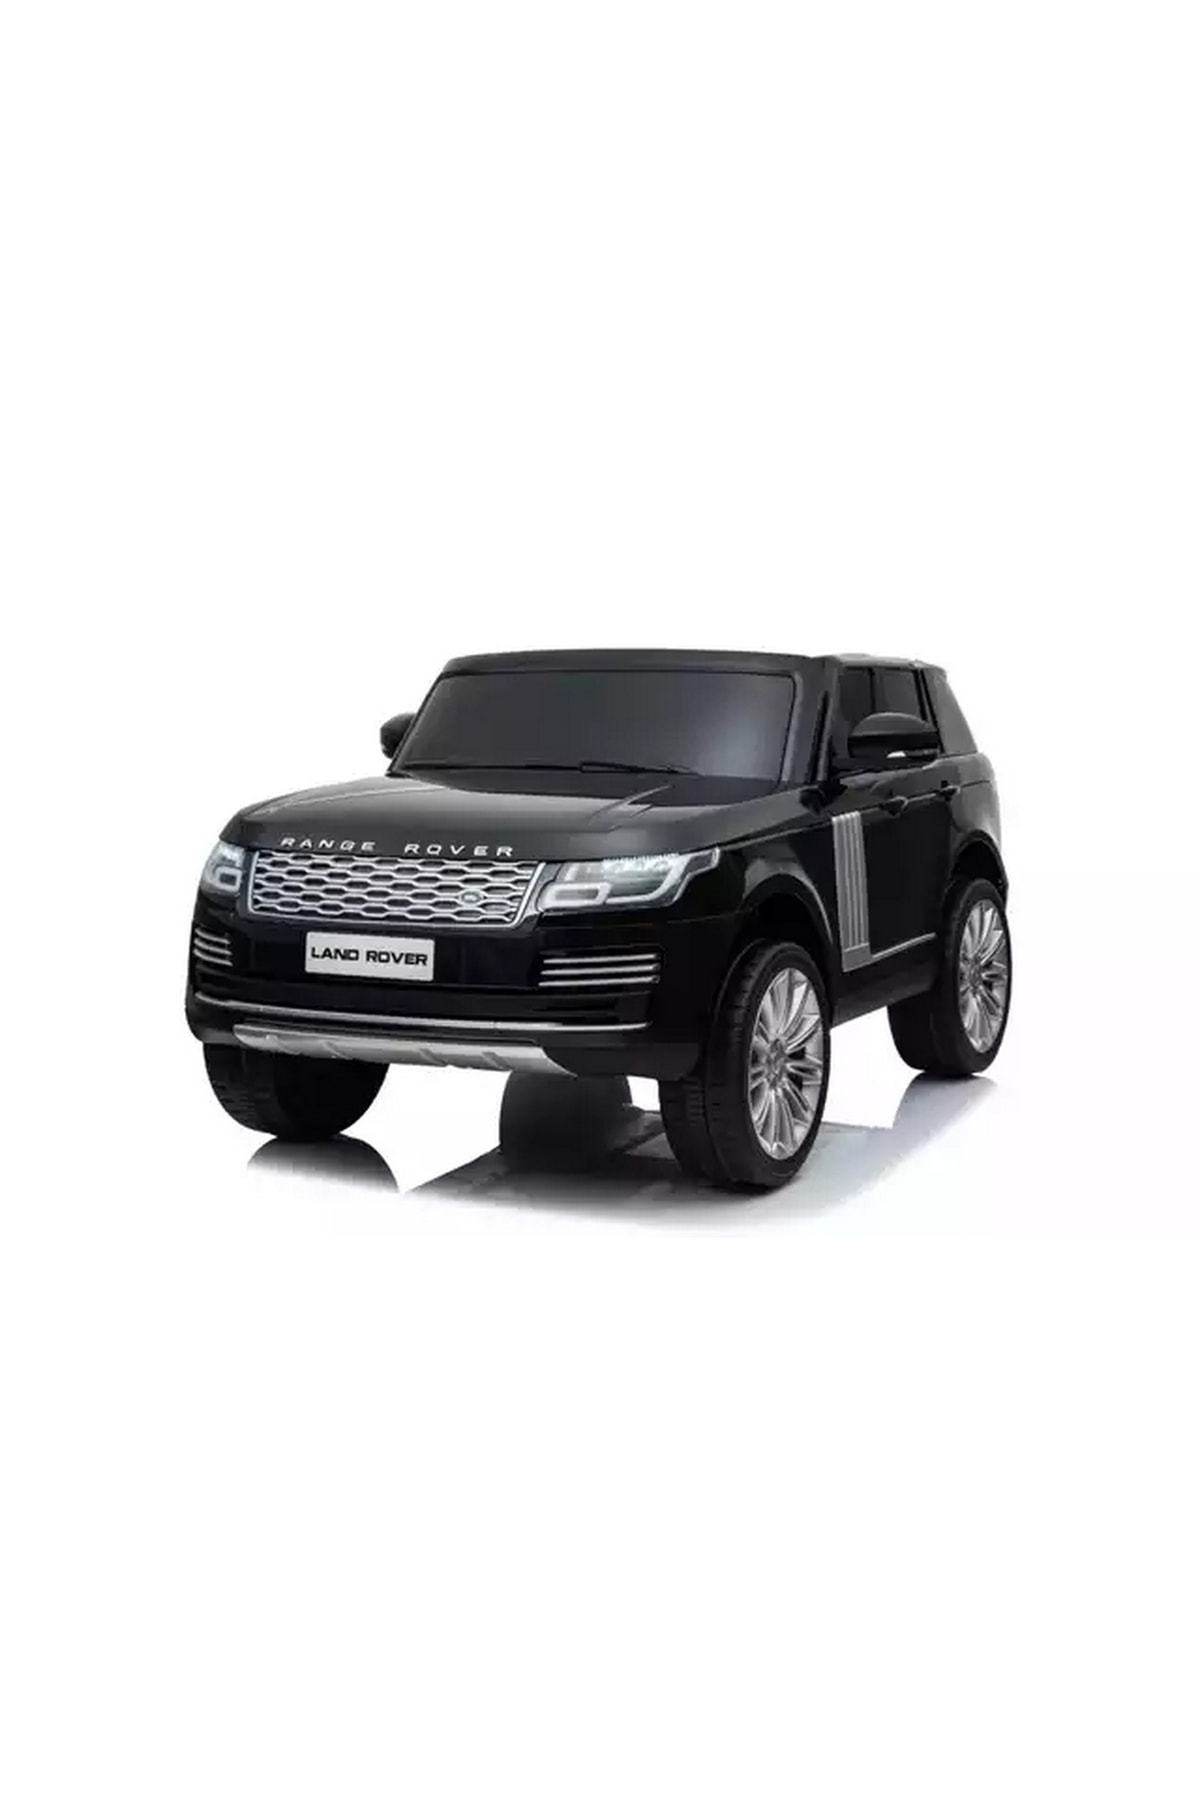 SUATESÇOCUKOTOGALERİSİ Range Rover Tablet Ekranlı Siyah Renk Akülü Araba ( Mega 2 Kişilik) 12 Volt 4 Motorlu Model